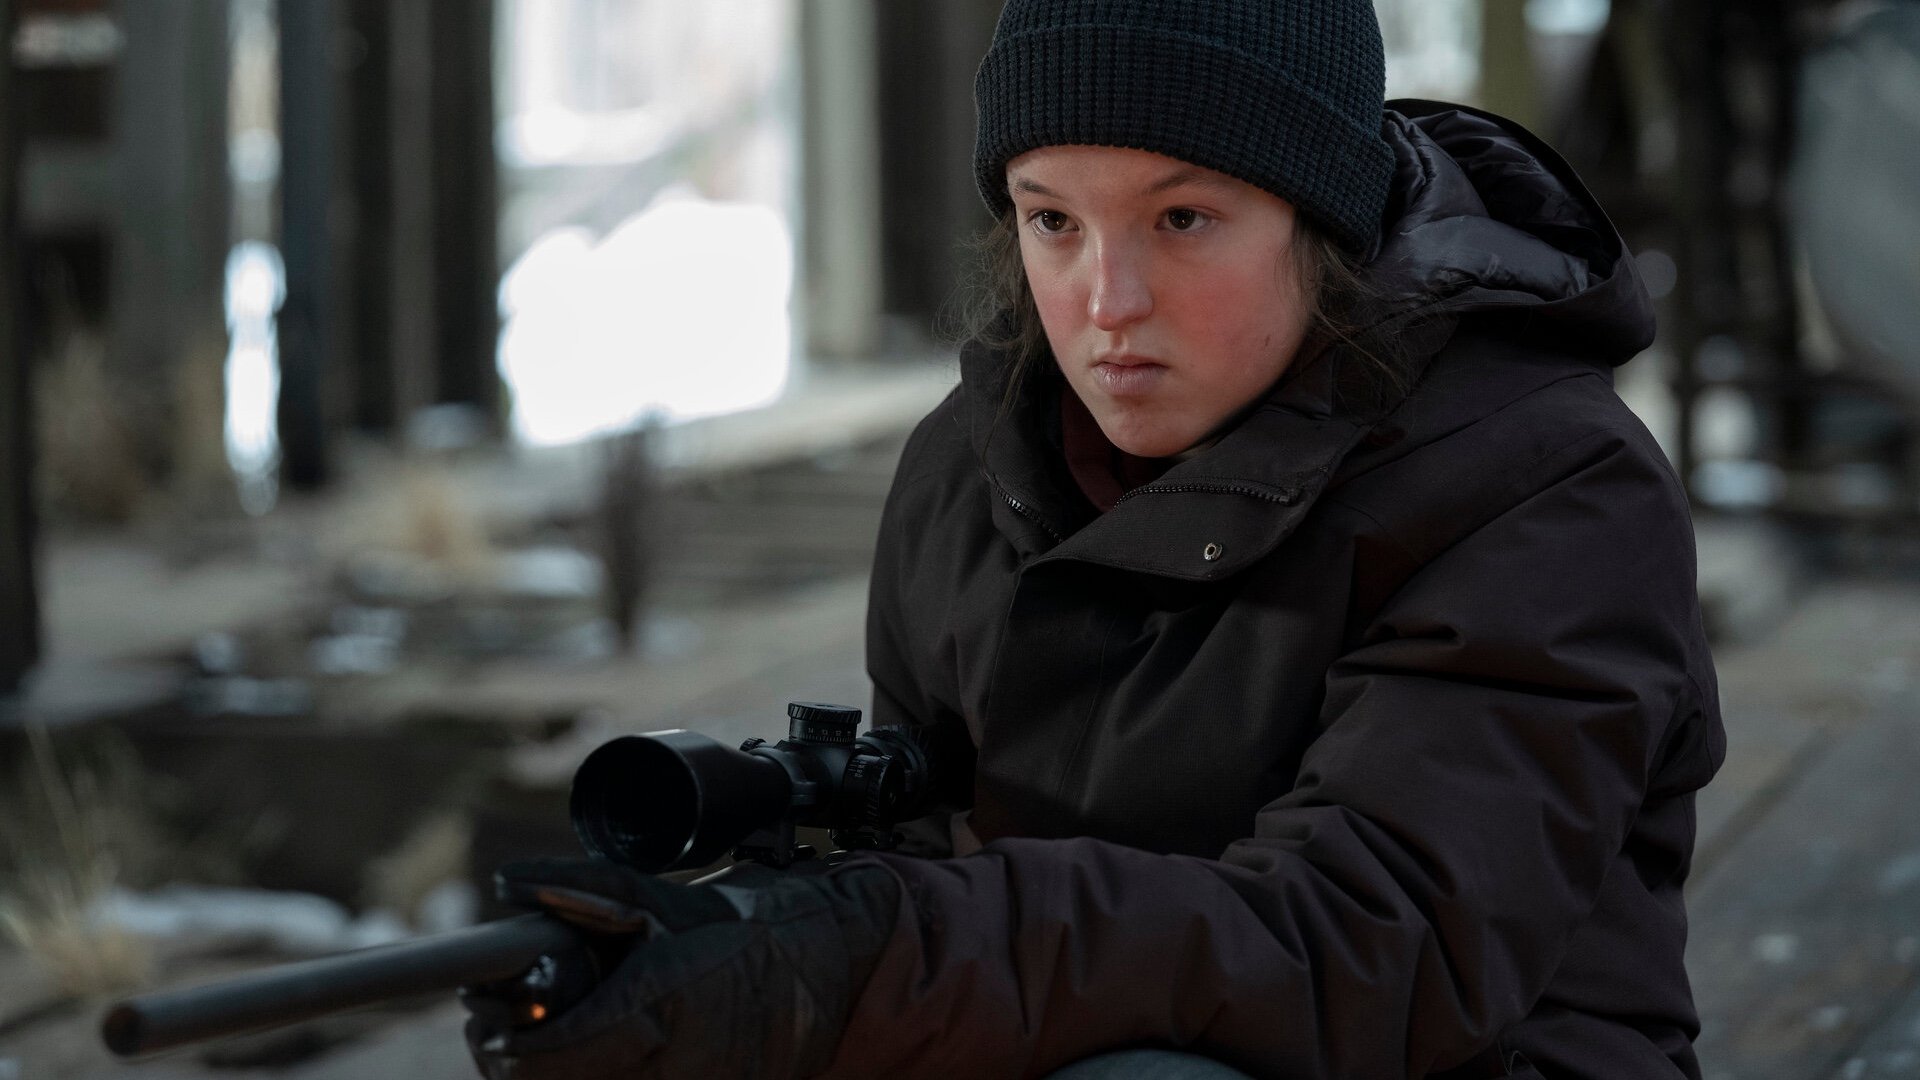 The Last of Us star Bella Ramsey gives season 2 update